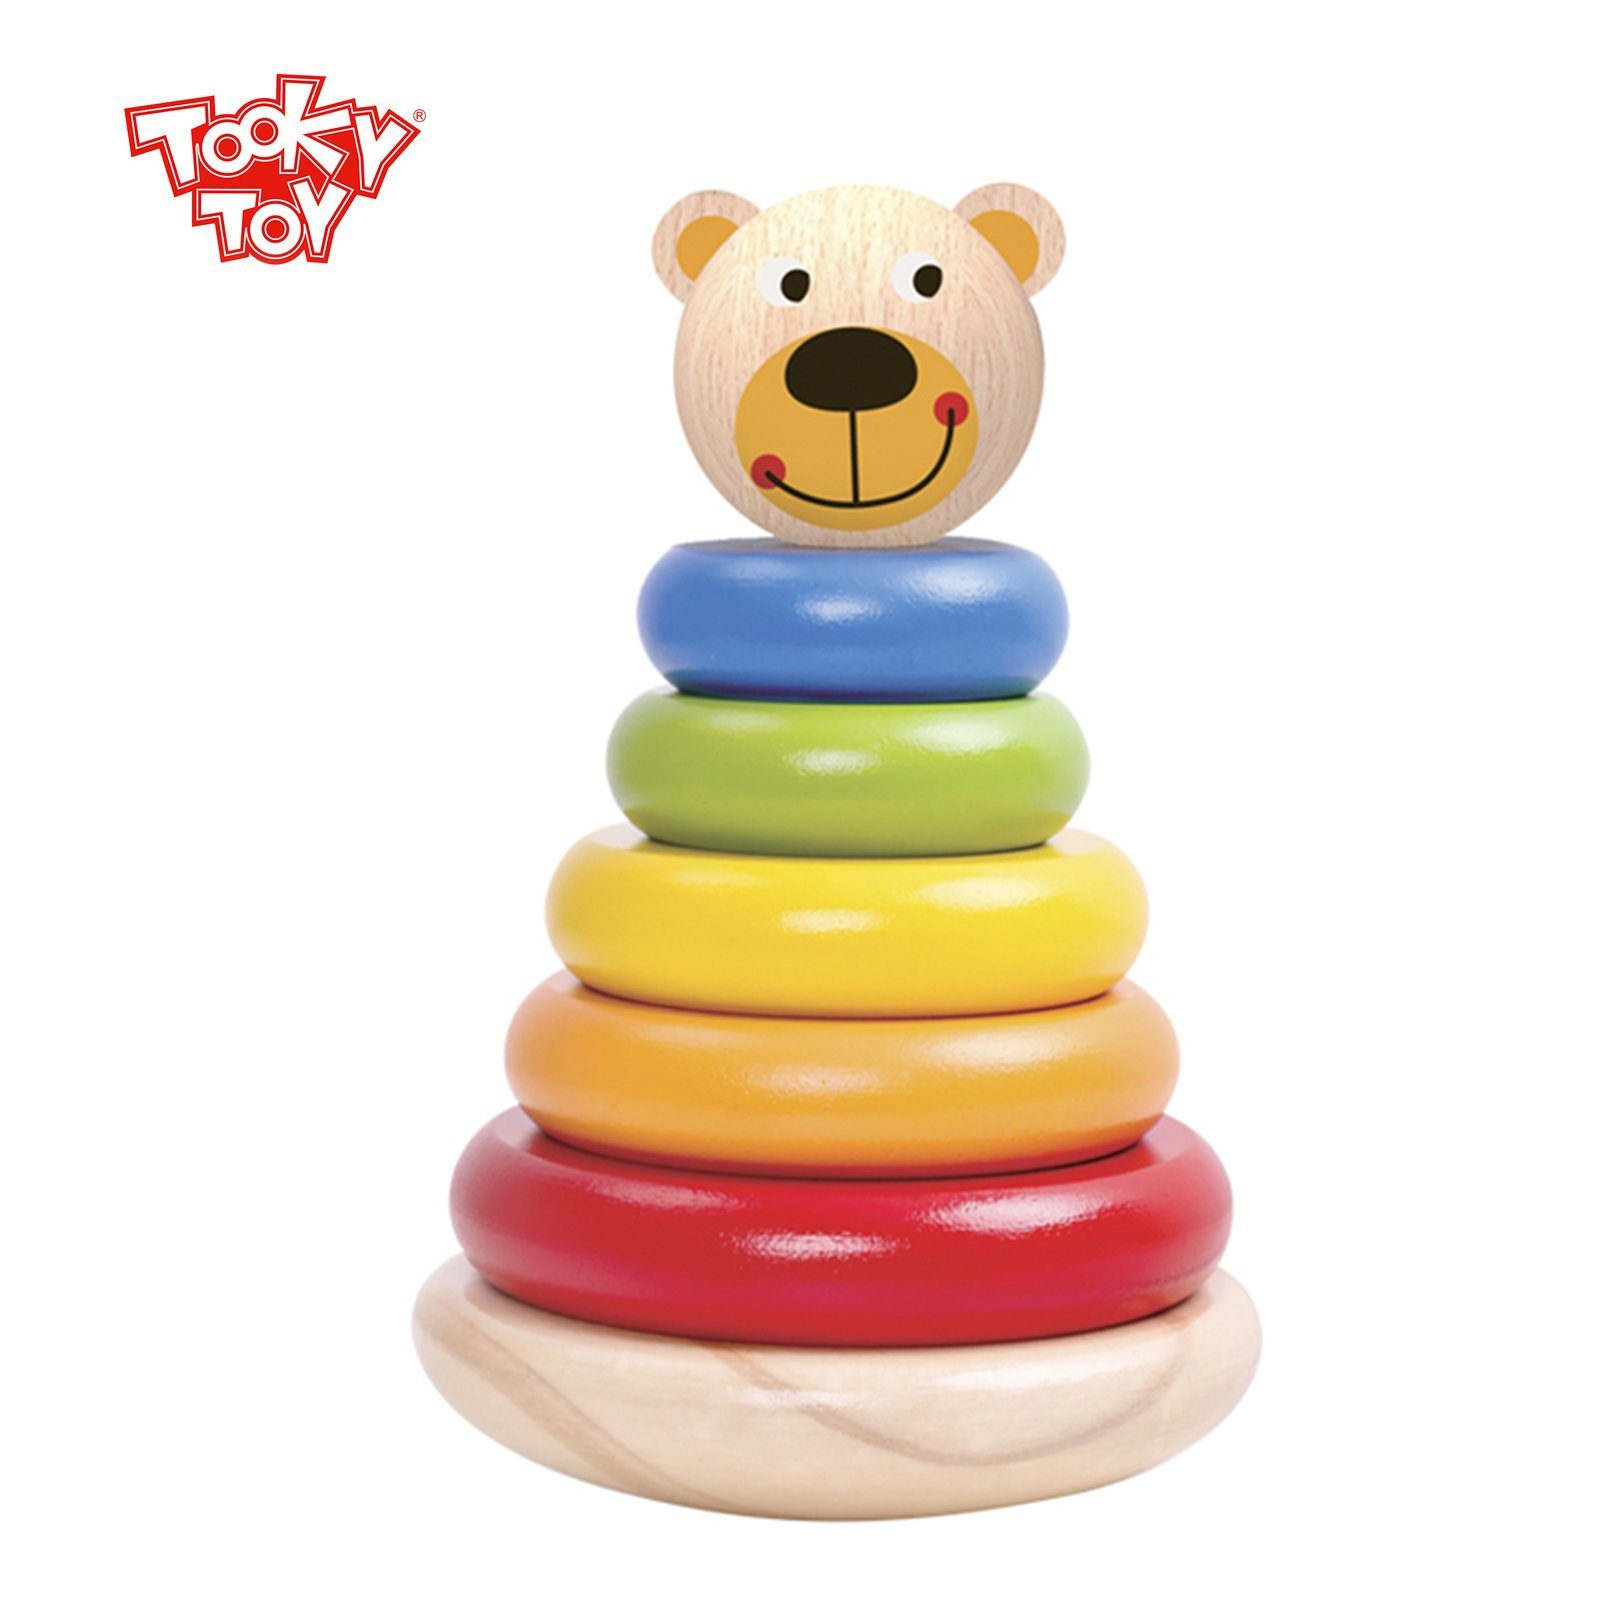 Tooky Toy Lernspielzeug Bär Wackelturm Holzspielzeug aus (Set, Regenbogen-Stapelbausteine), Holz Stapelspielzeug Balancierspiel